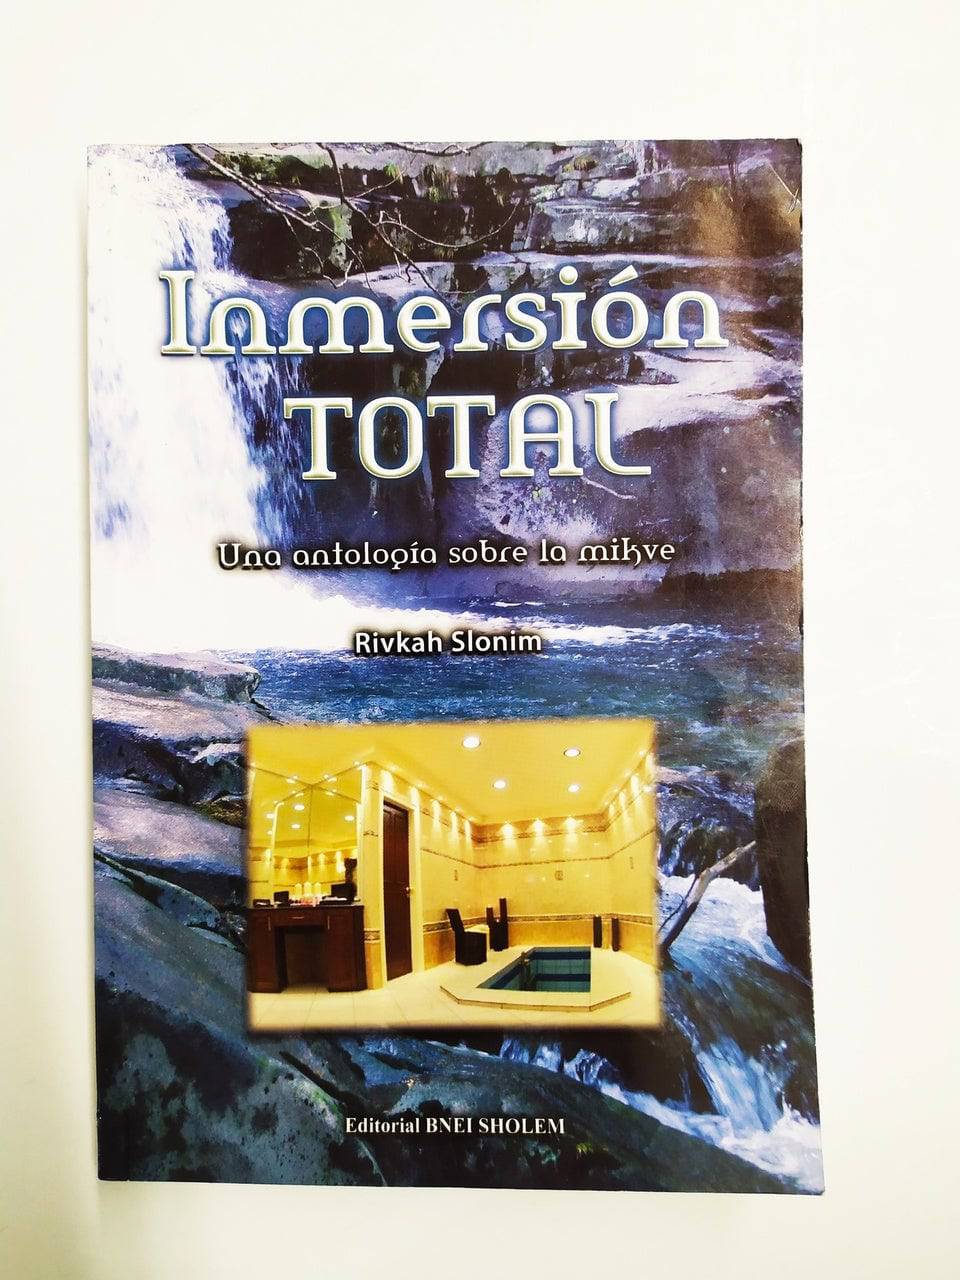 Inmersion Total - Libreria Jerusalem Centro